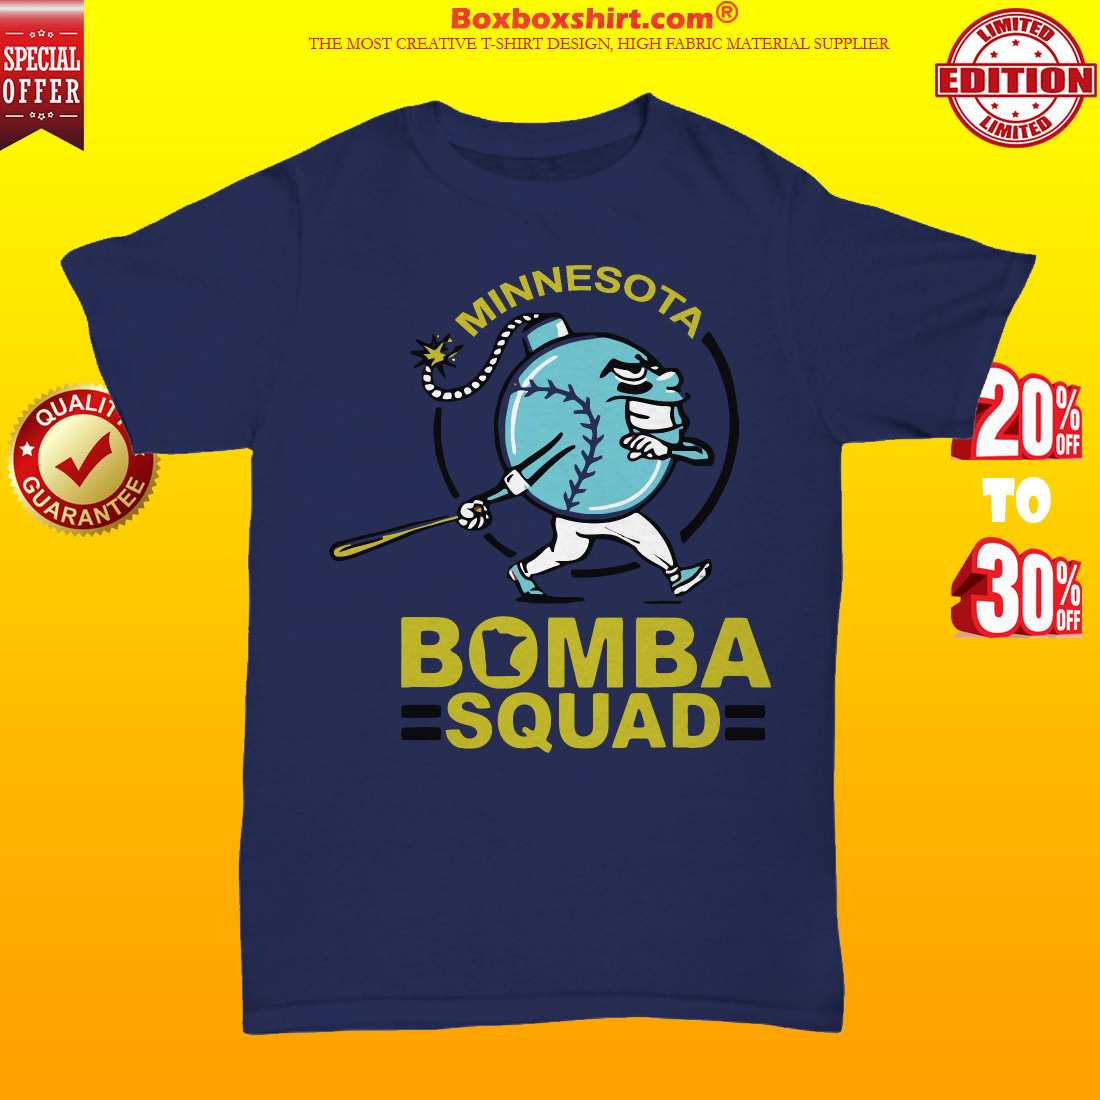 Minnesota Bomba squad unisex tee shirt